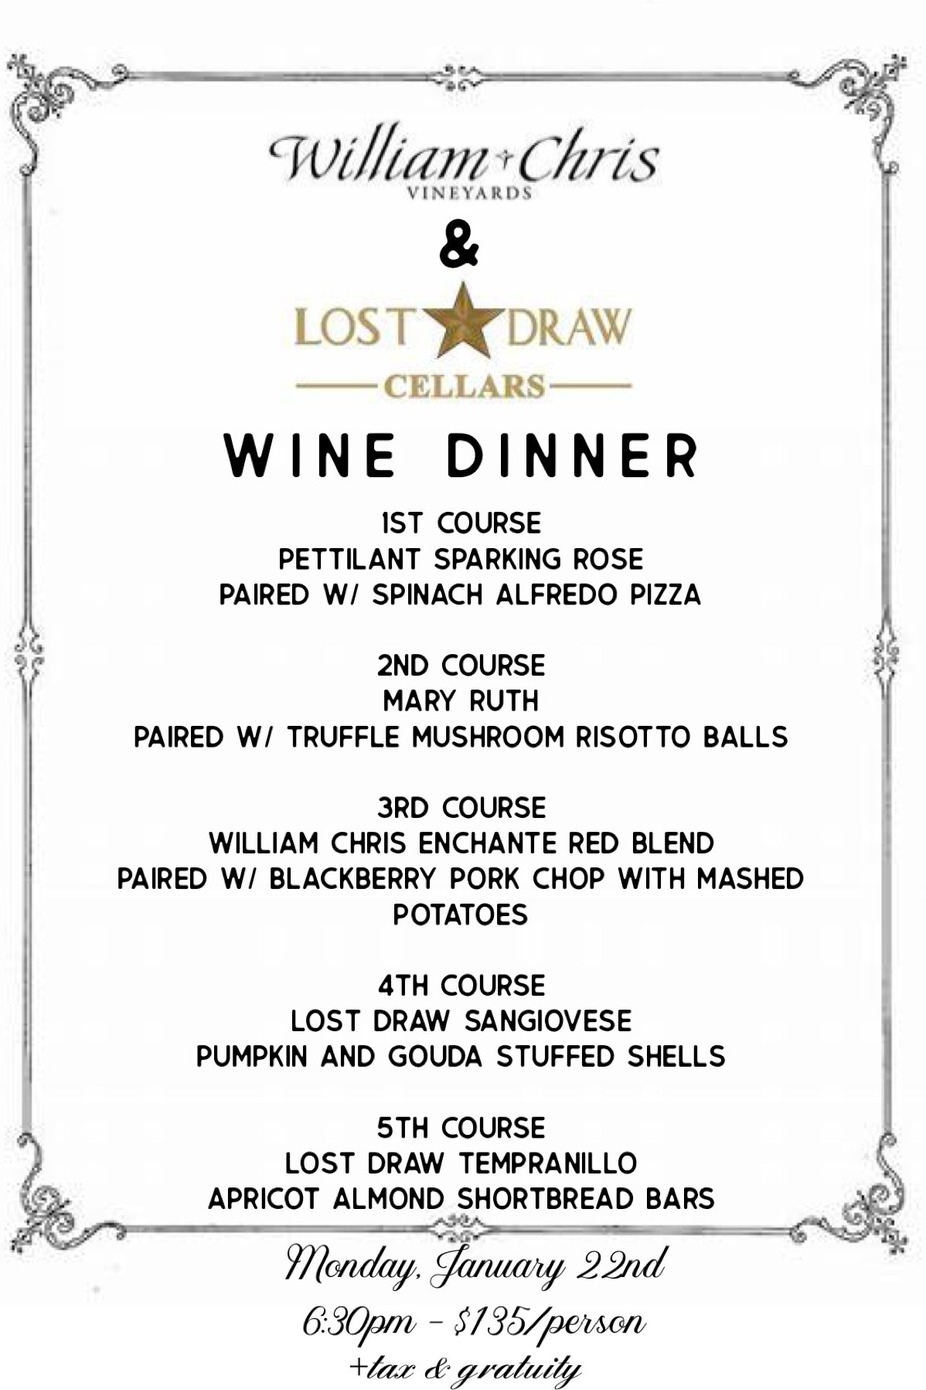 Lost Draw/ William Chris Wine Dinner event photo